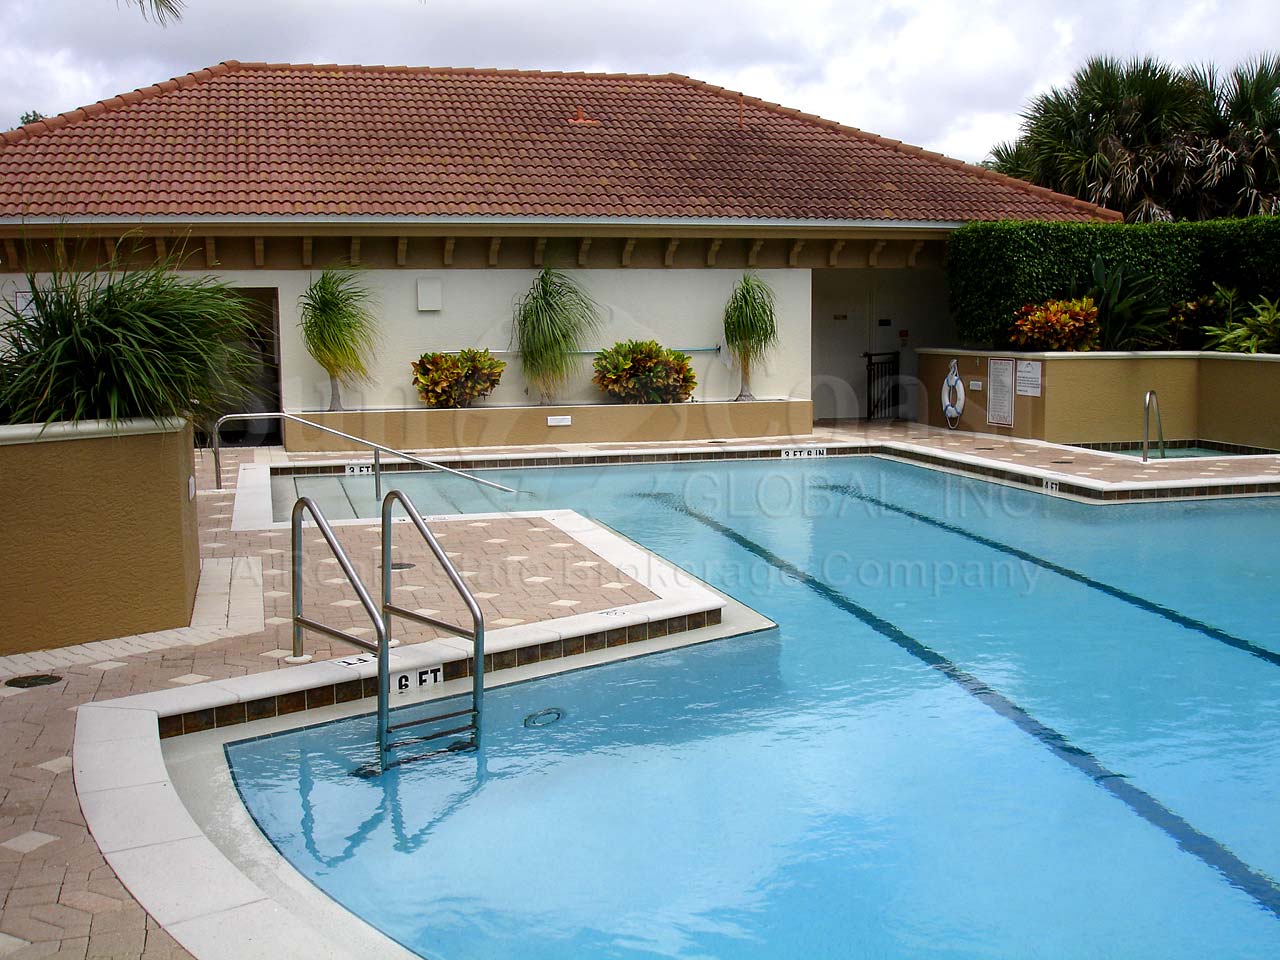 Coronado Community Pool